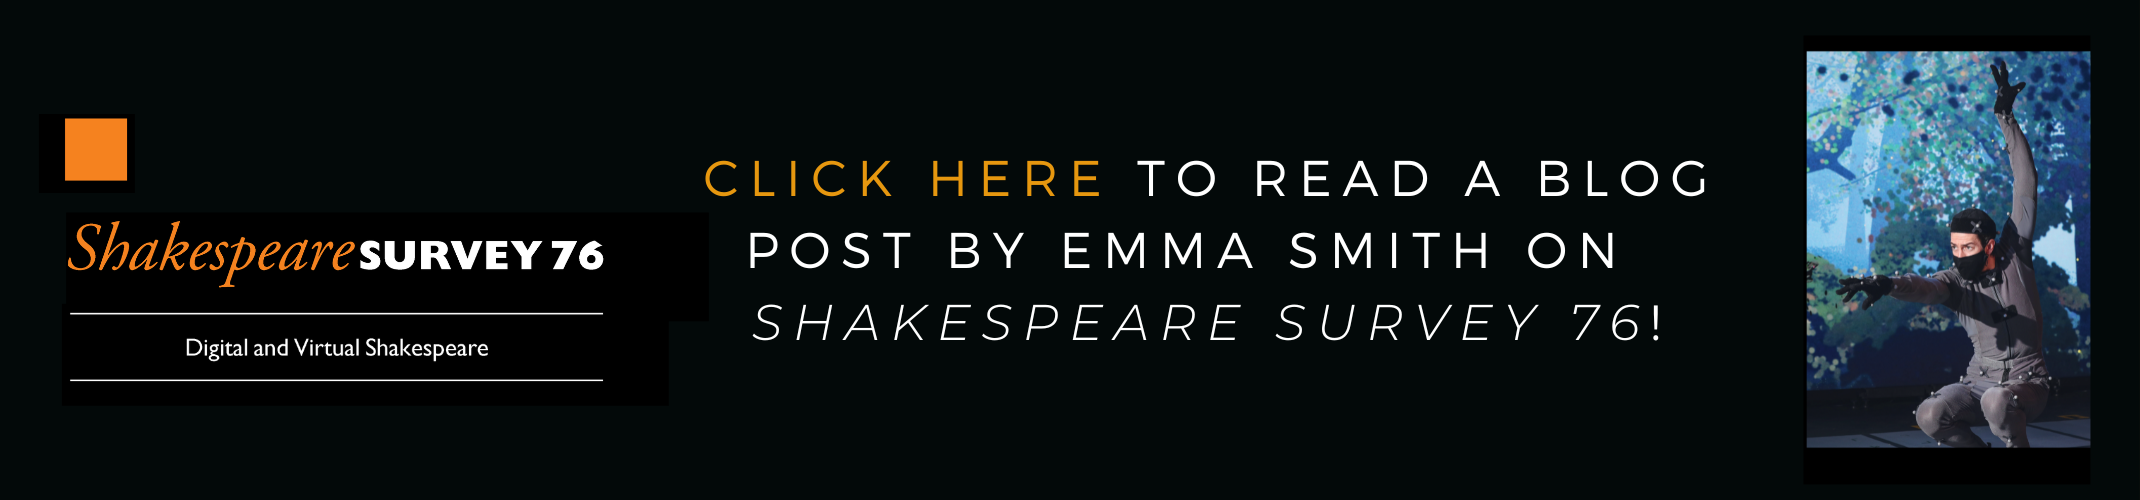 Shakespeare Survey 76 blog post by Emma Smith